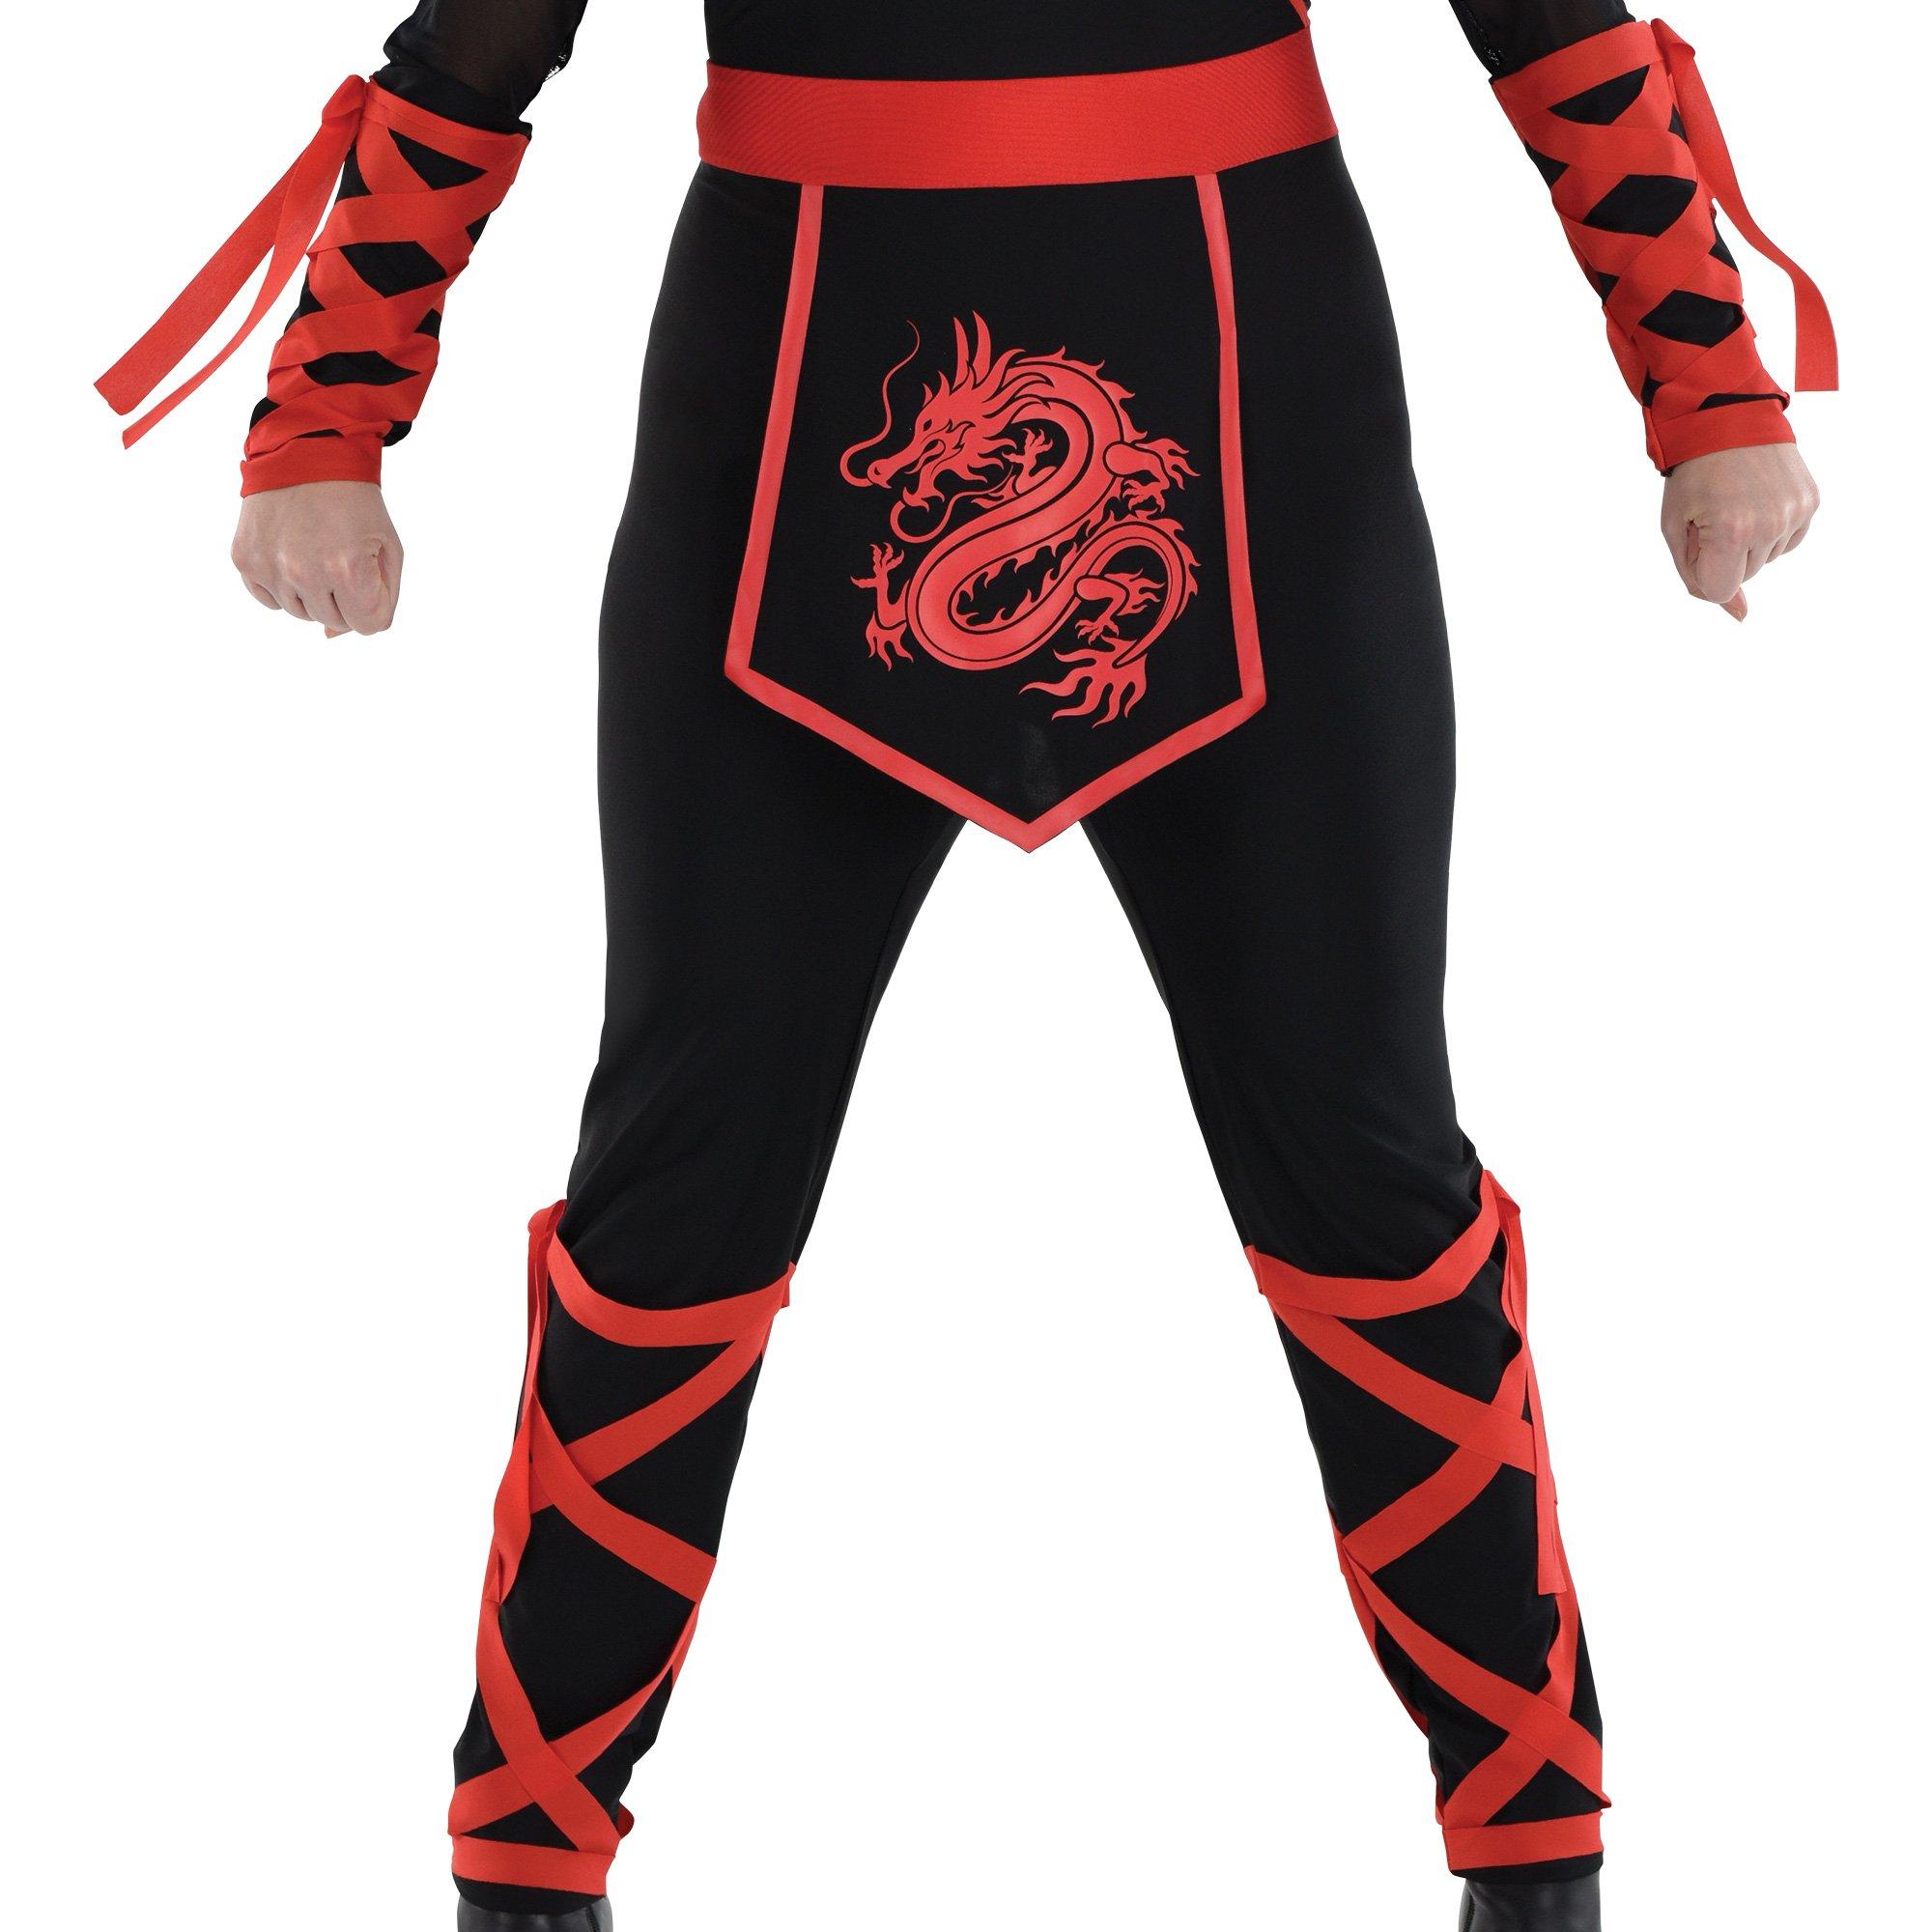 Women's Ninja Assassin Plus Size Costume